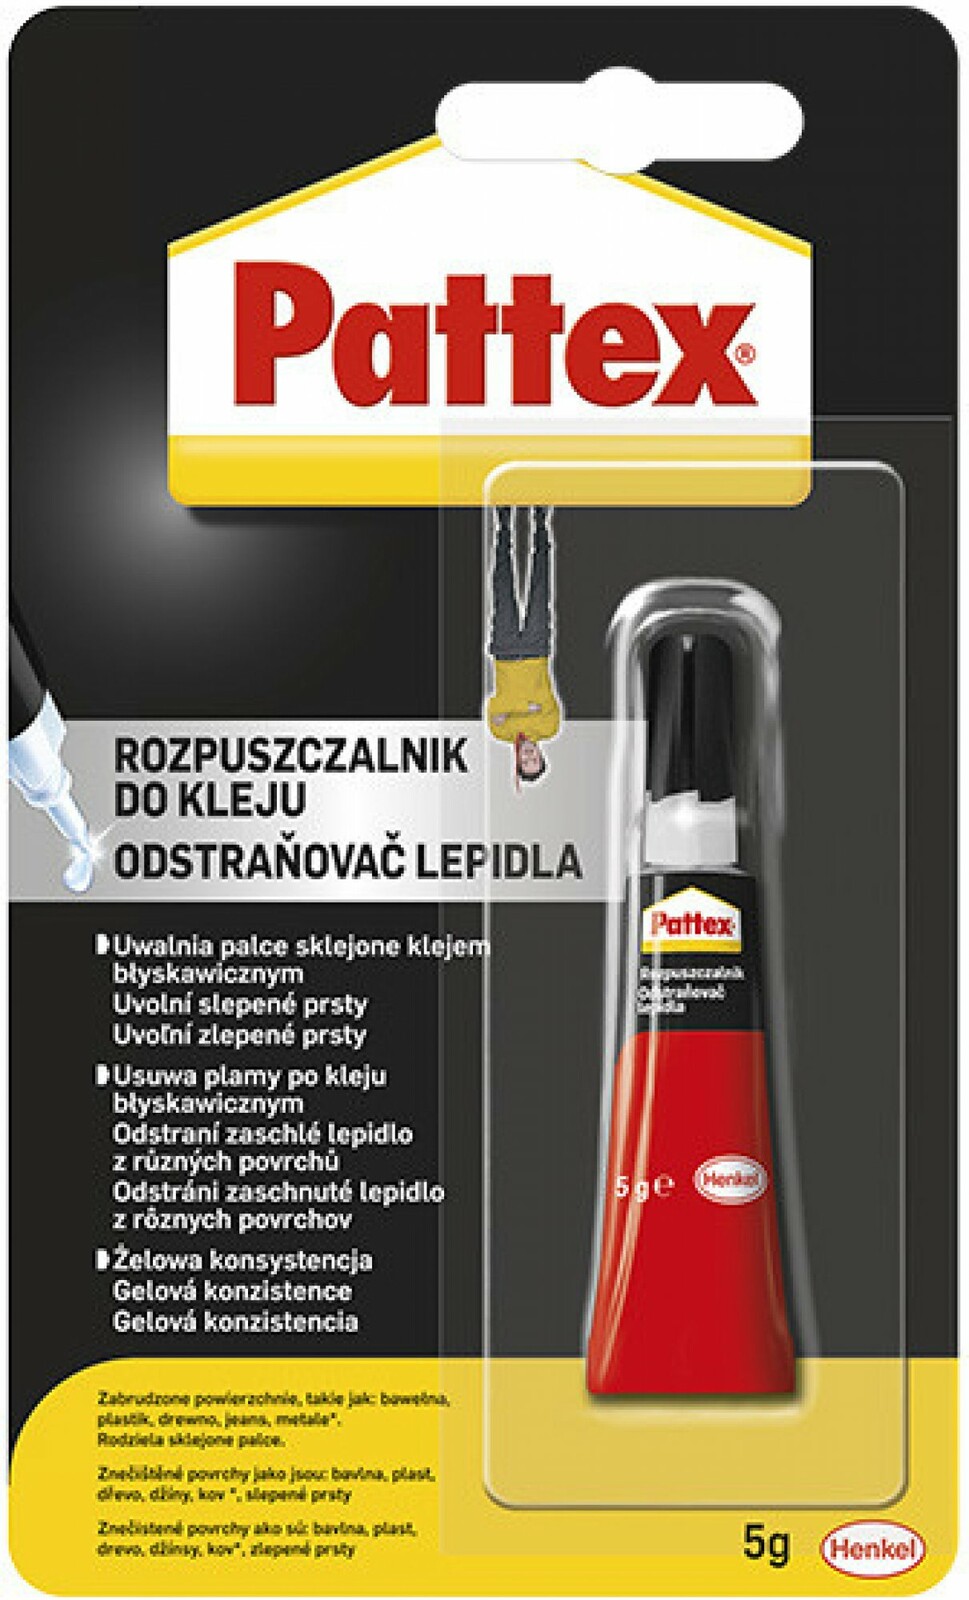 Pattex - odstraňovač lepidla SUPER ATTAK, 5g